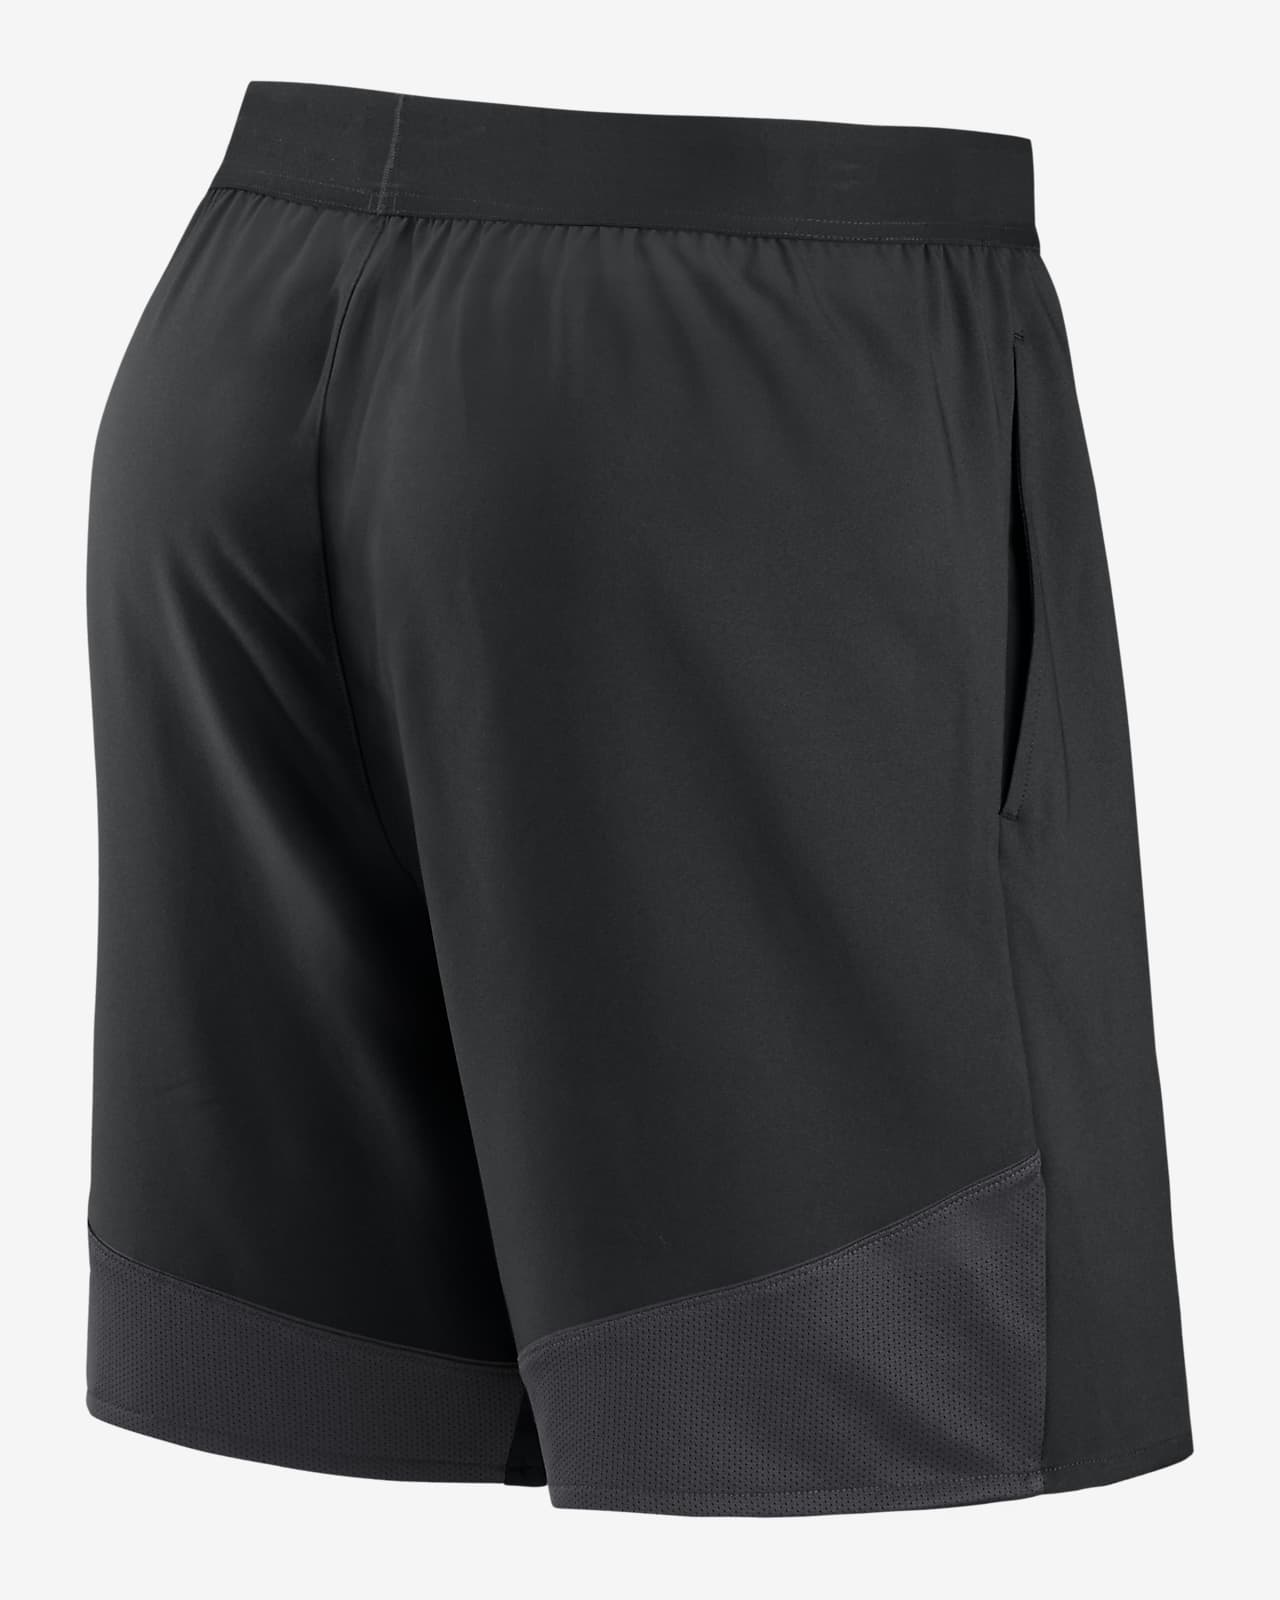 Nike Therma Logo (NFL Las Vegas Raiders) Men's Pants.